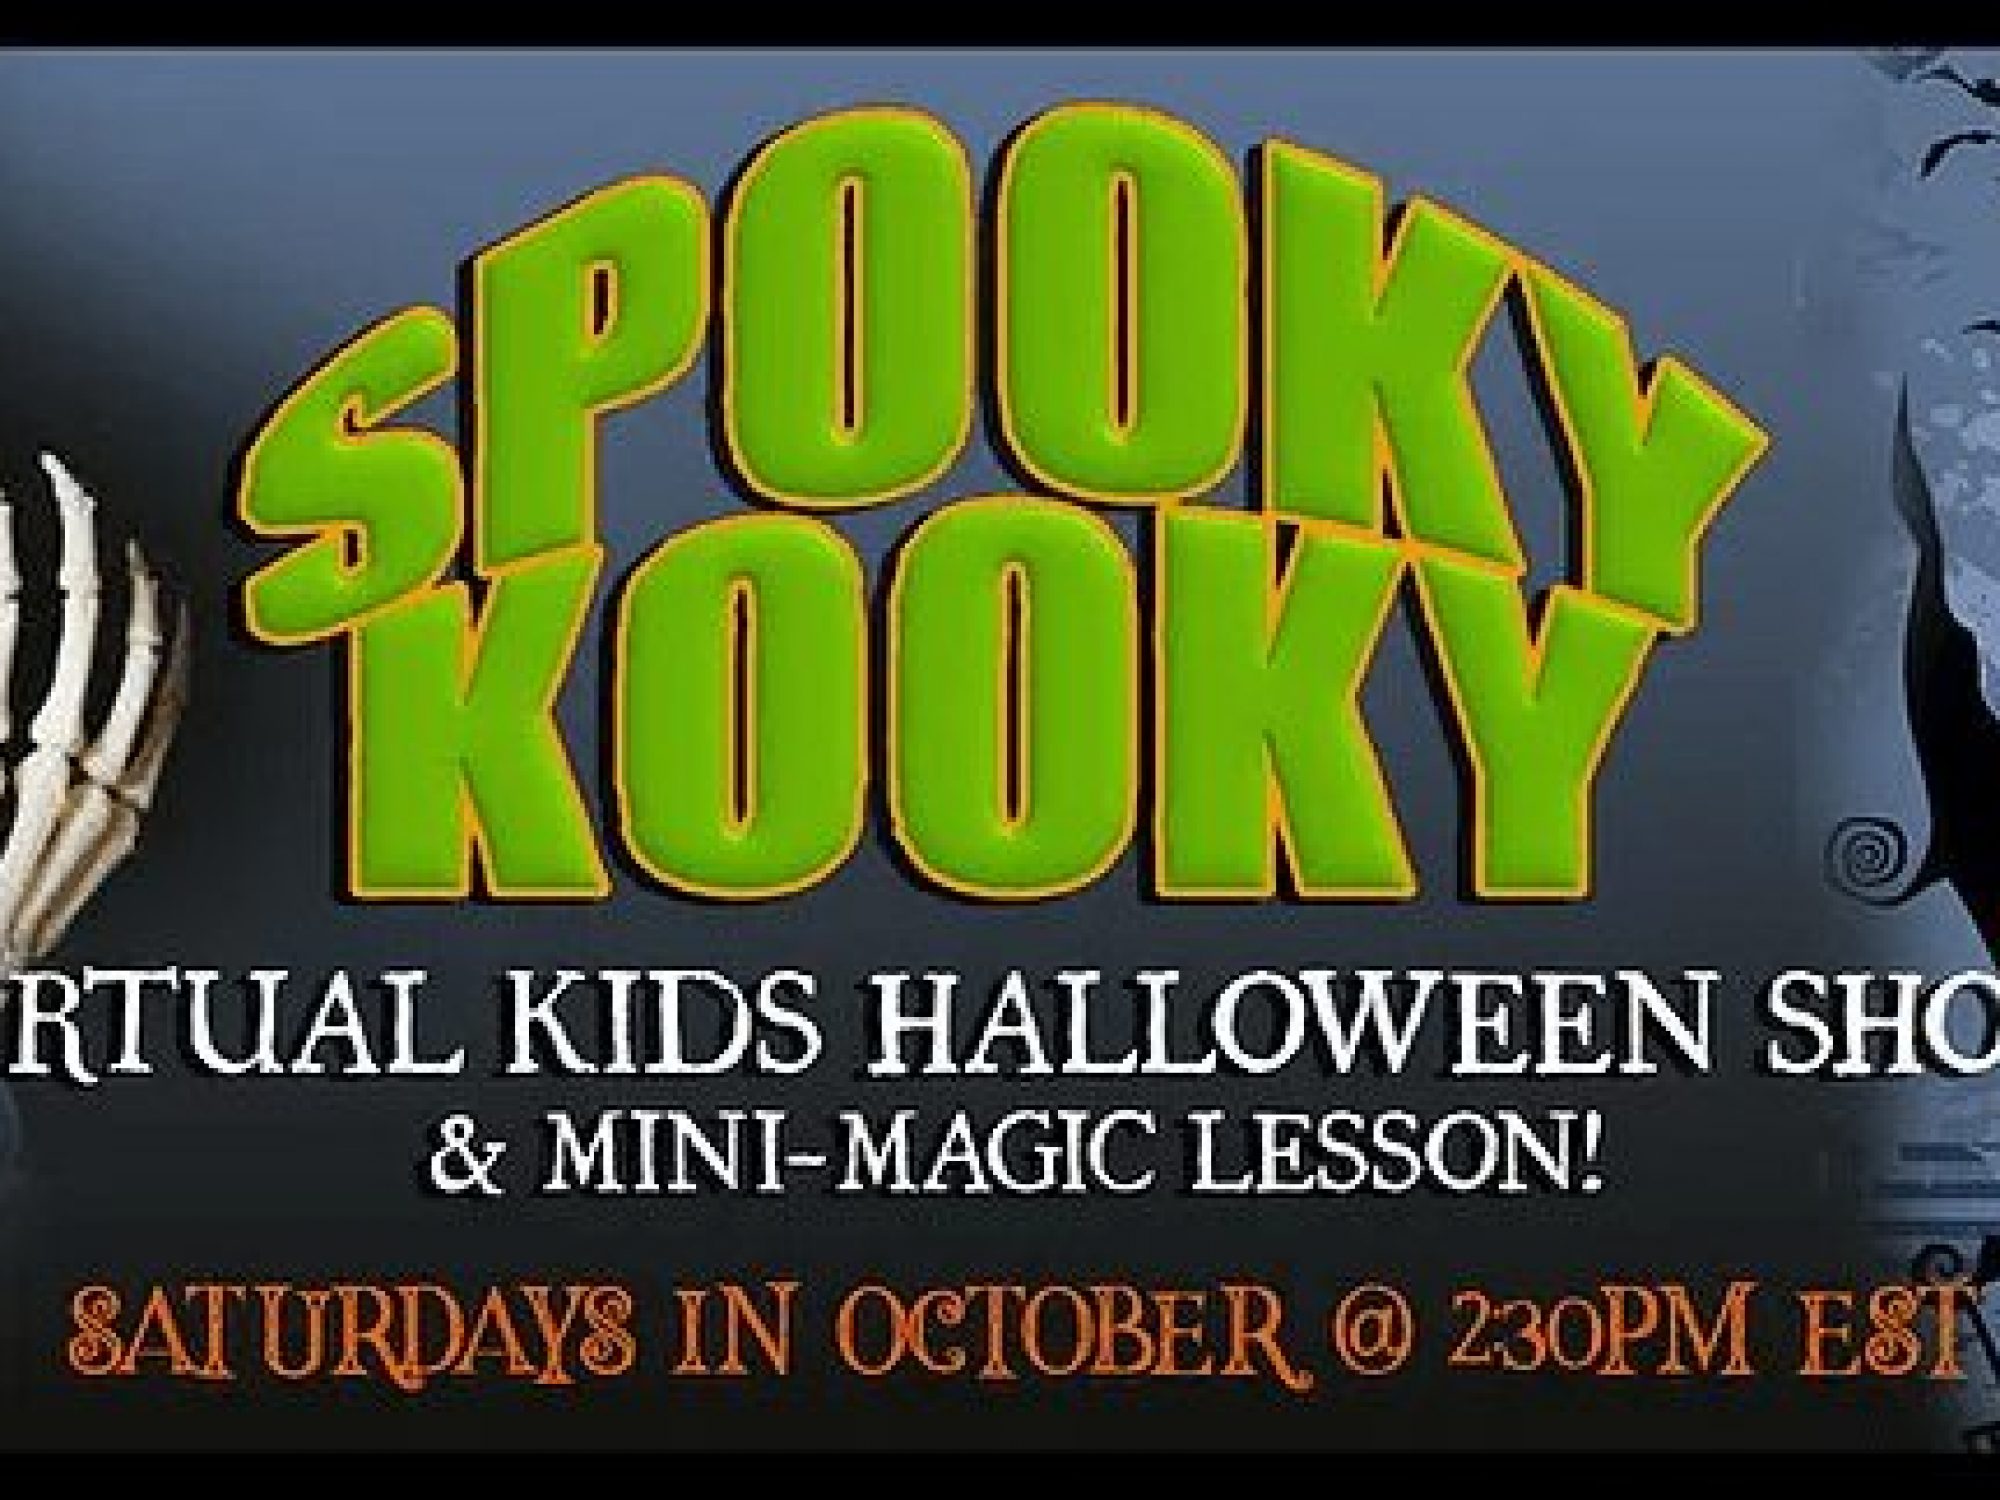 spooky kooky virtual Halloween show